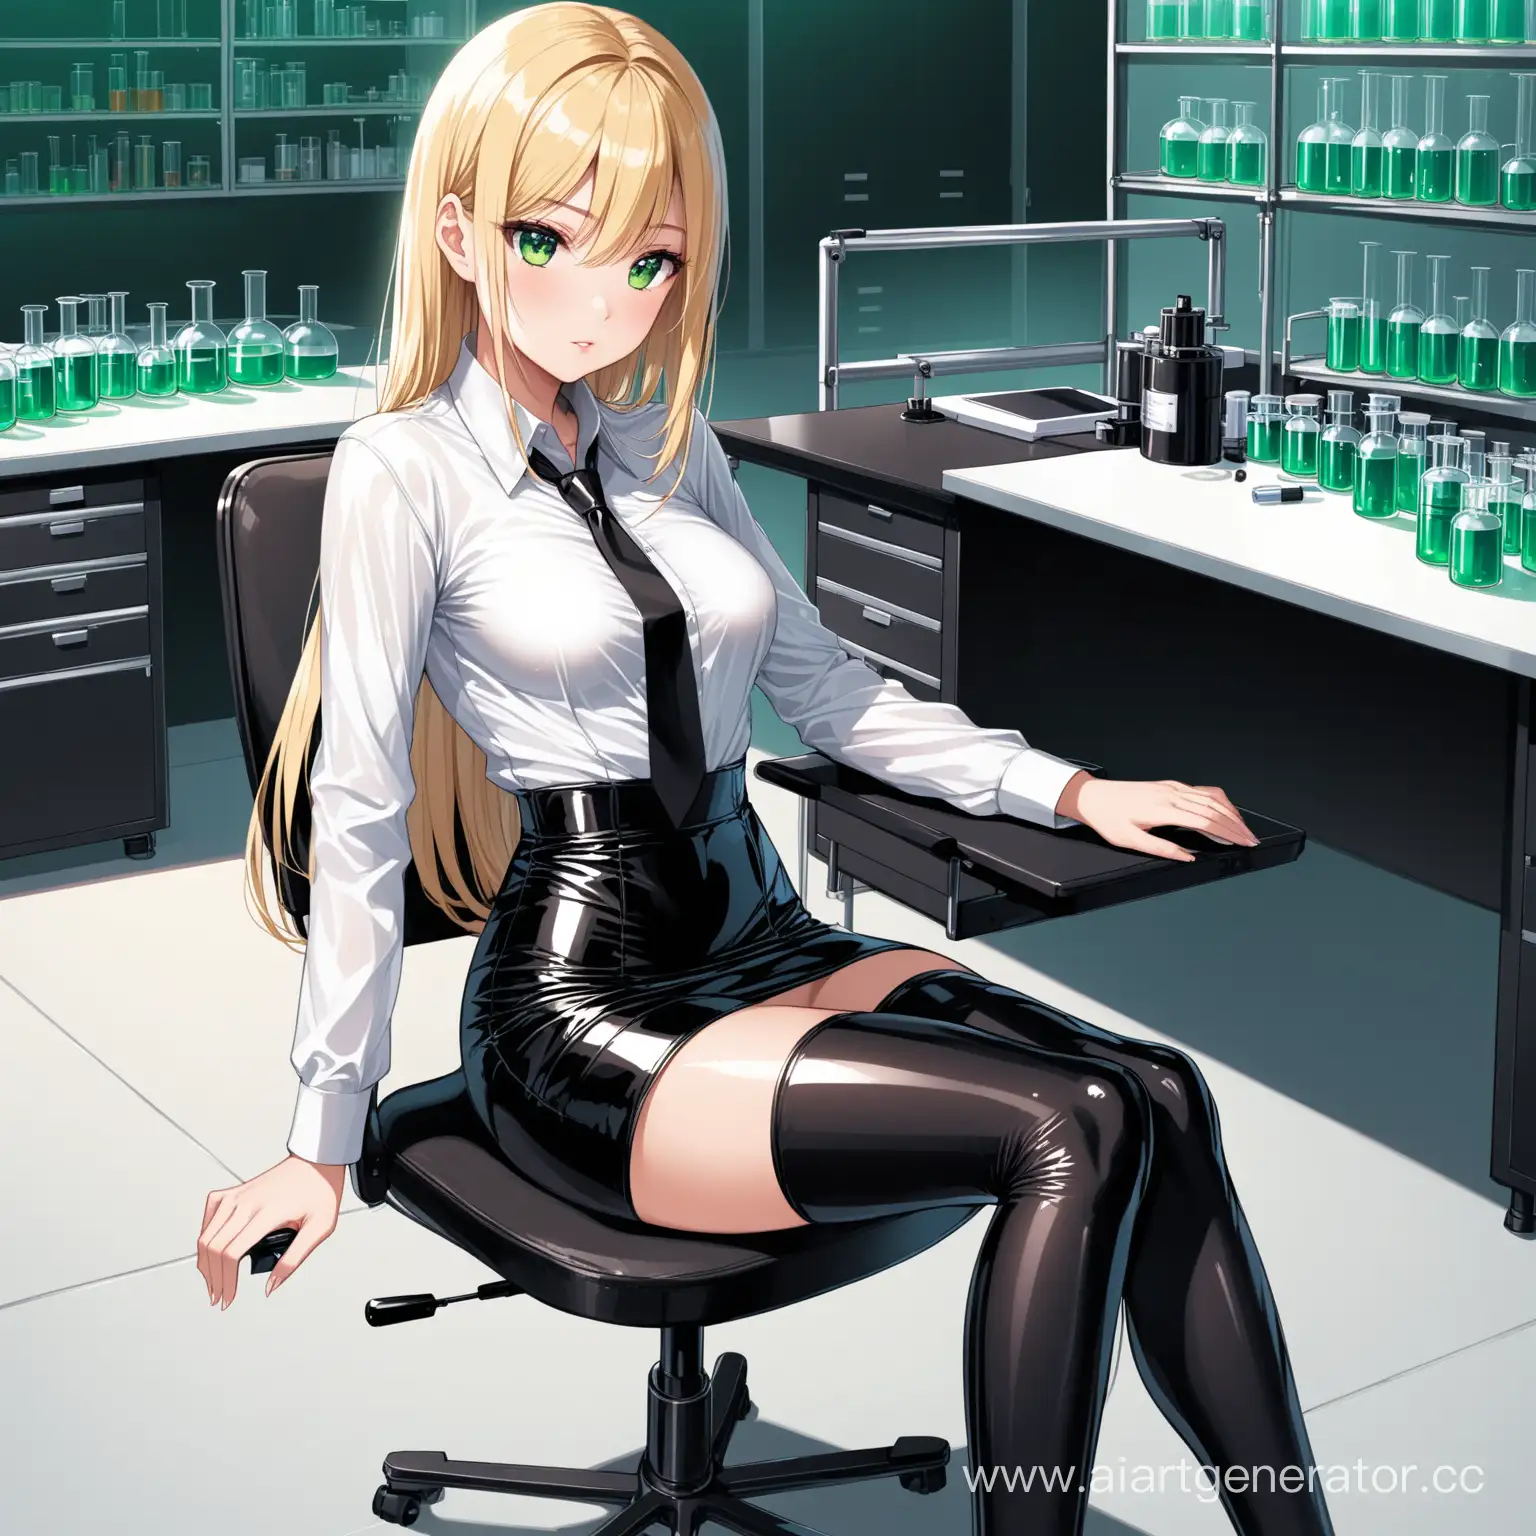 Seductive-Blonde-in-Laboratory-Setting-Short-Skirt-and-Stockings